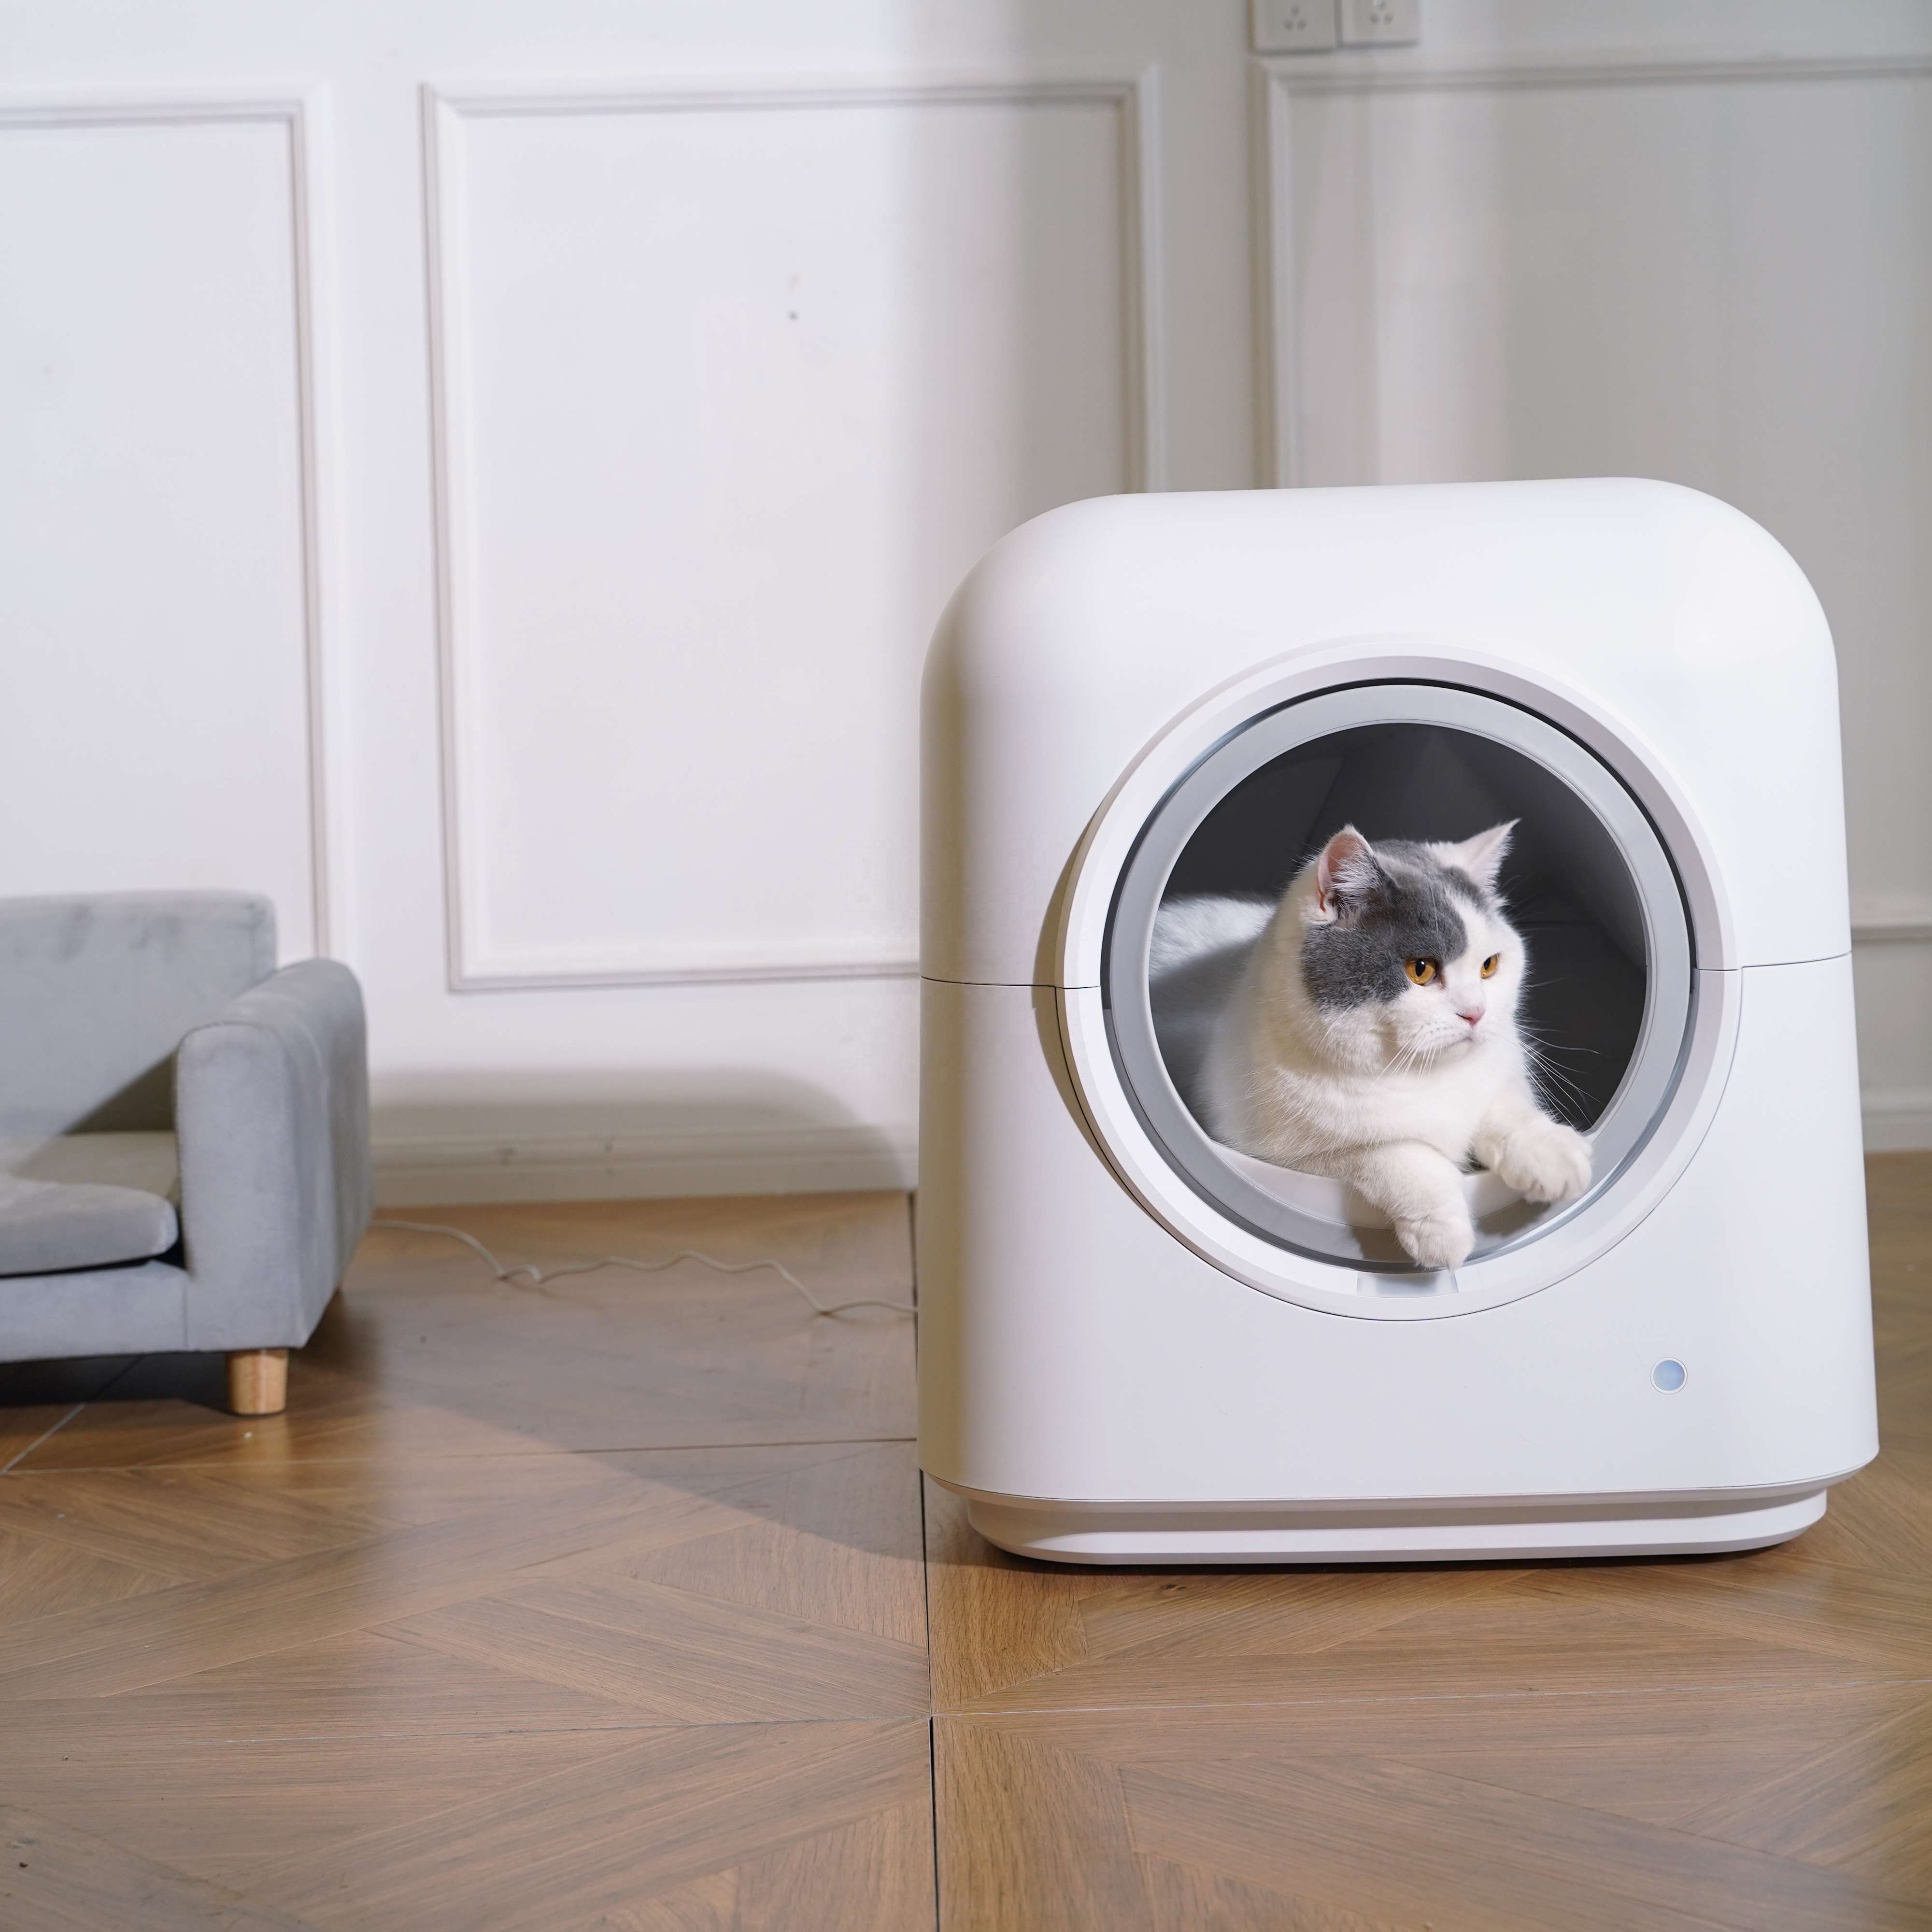 High Capacity App Control Self-Cleaning Smart Cat Litter Box